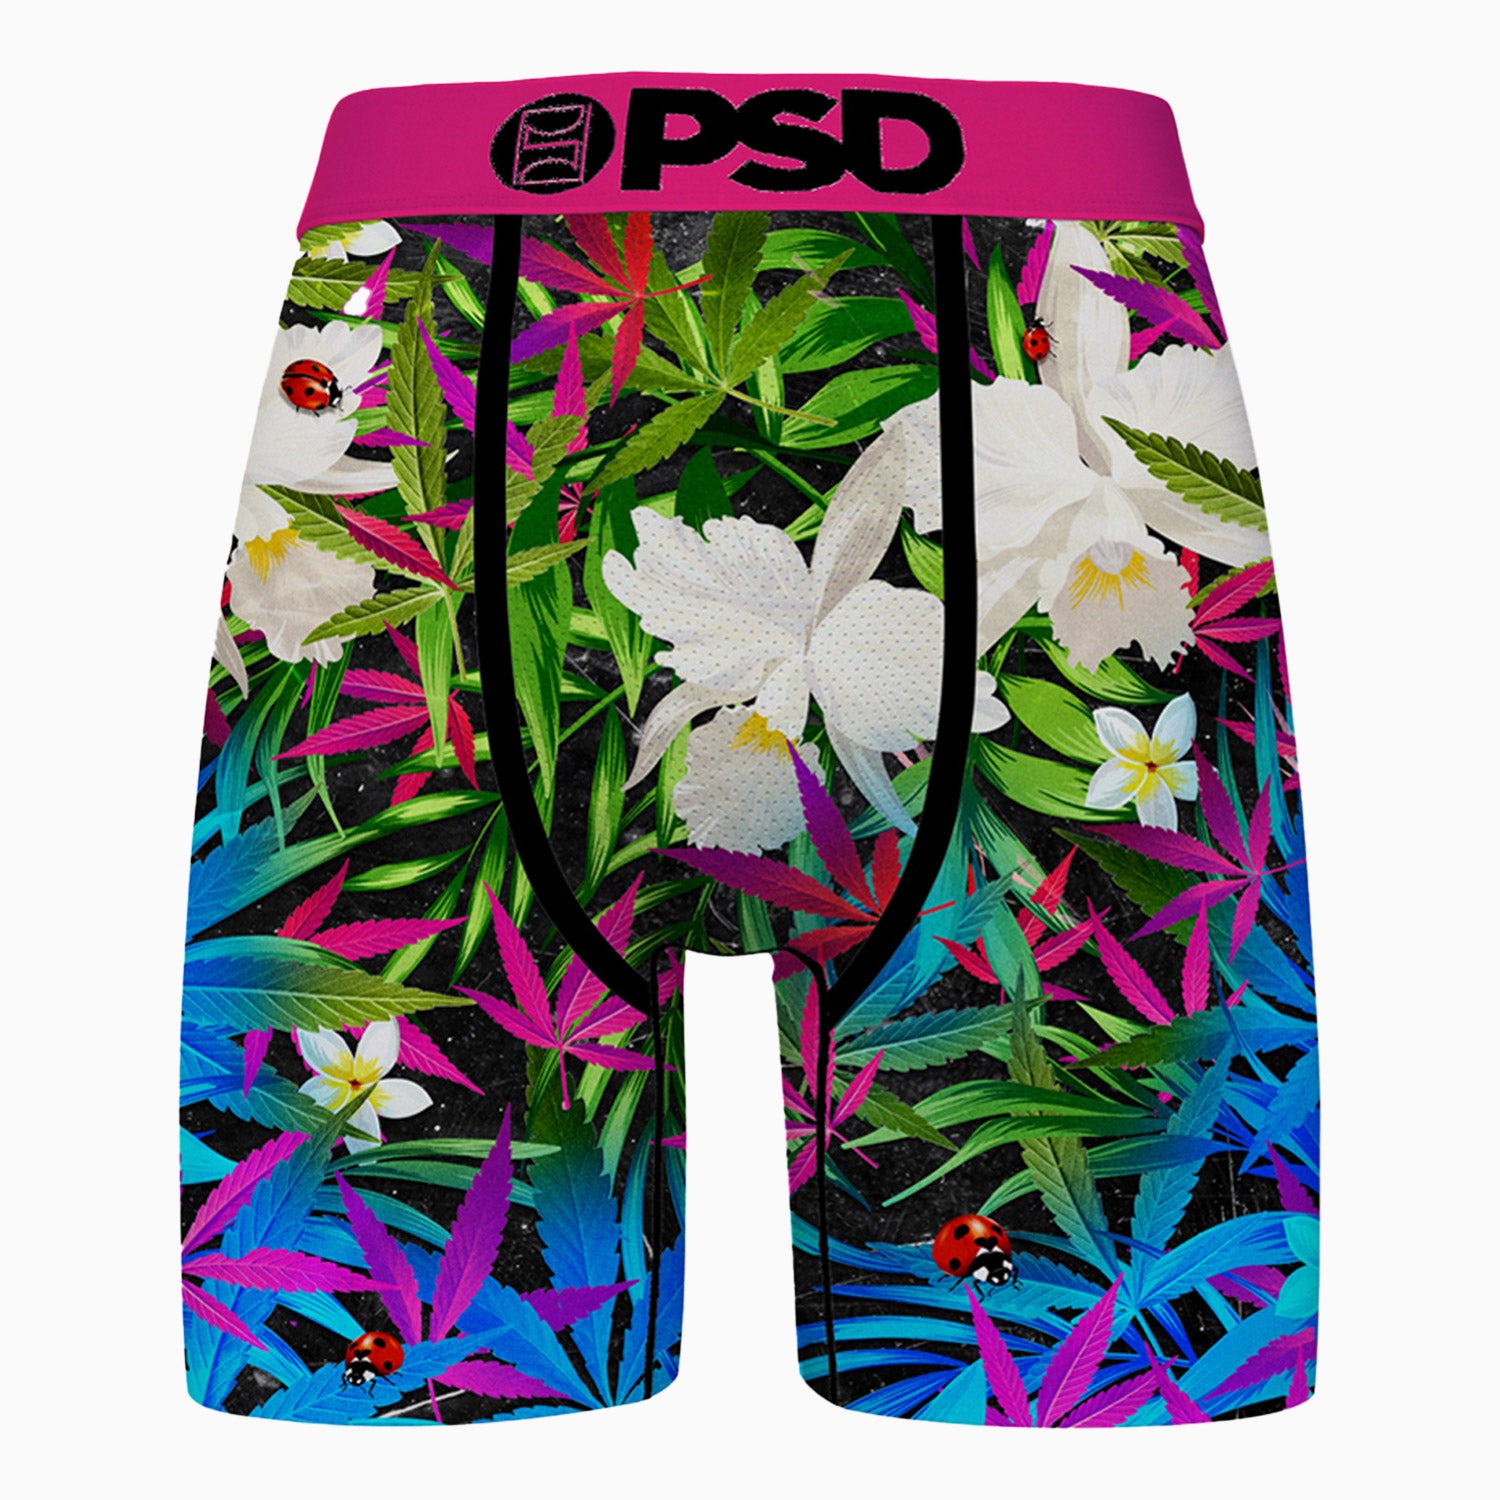 PSD Underwear Men's Harvest Print Boxer